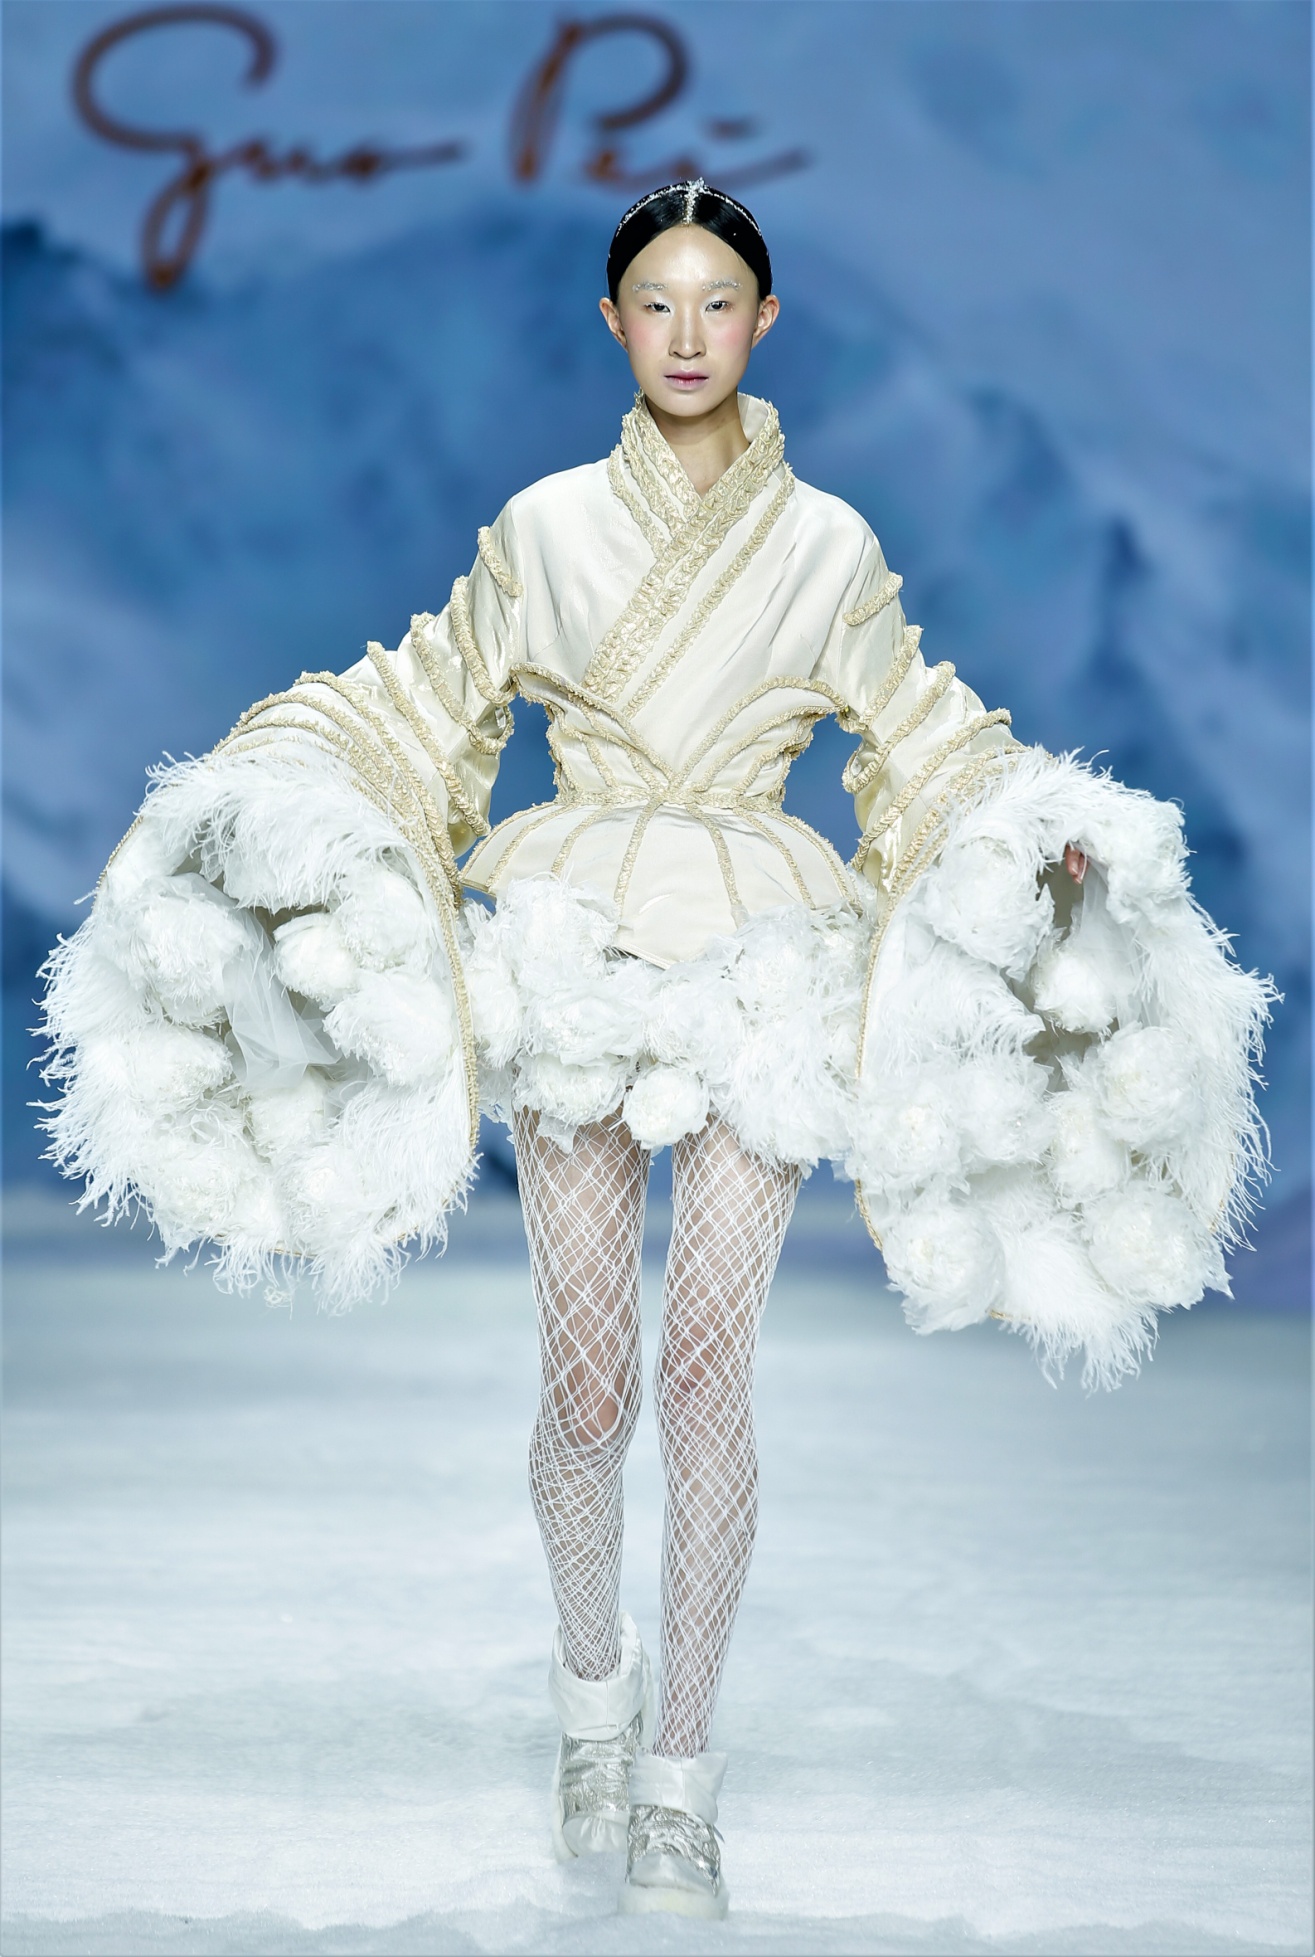 Silk Road Guo Pei White feathers.jpg